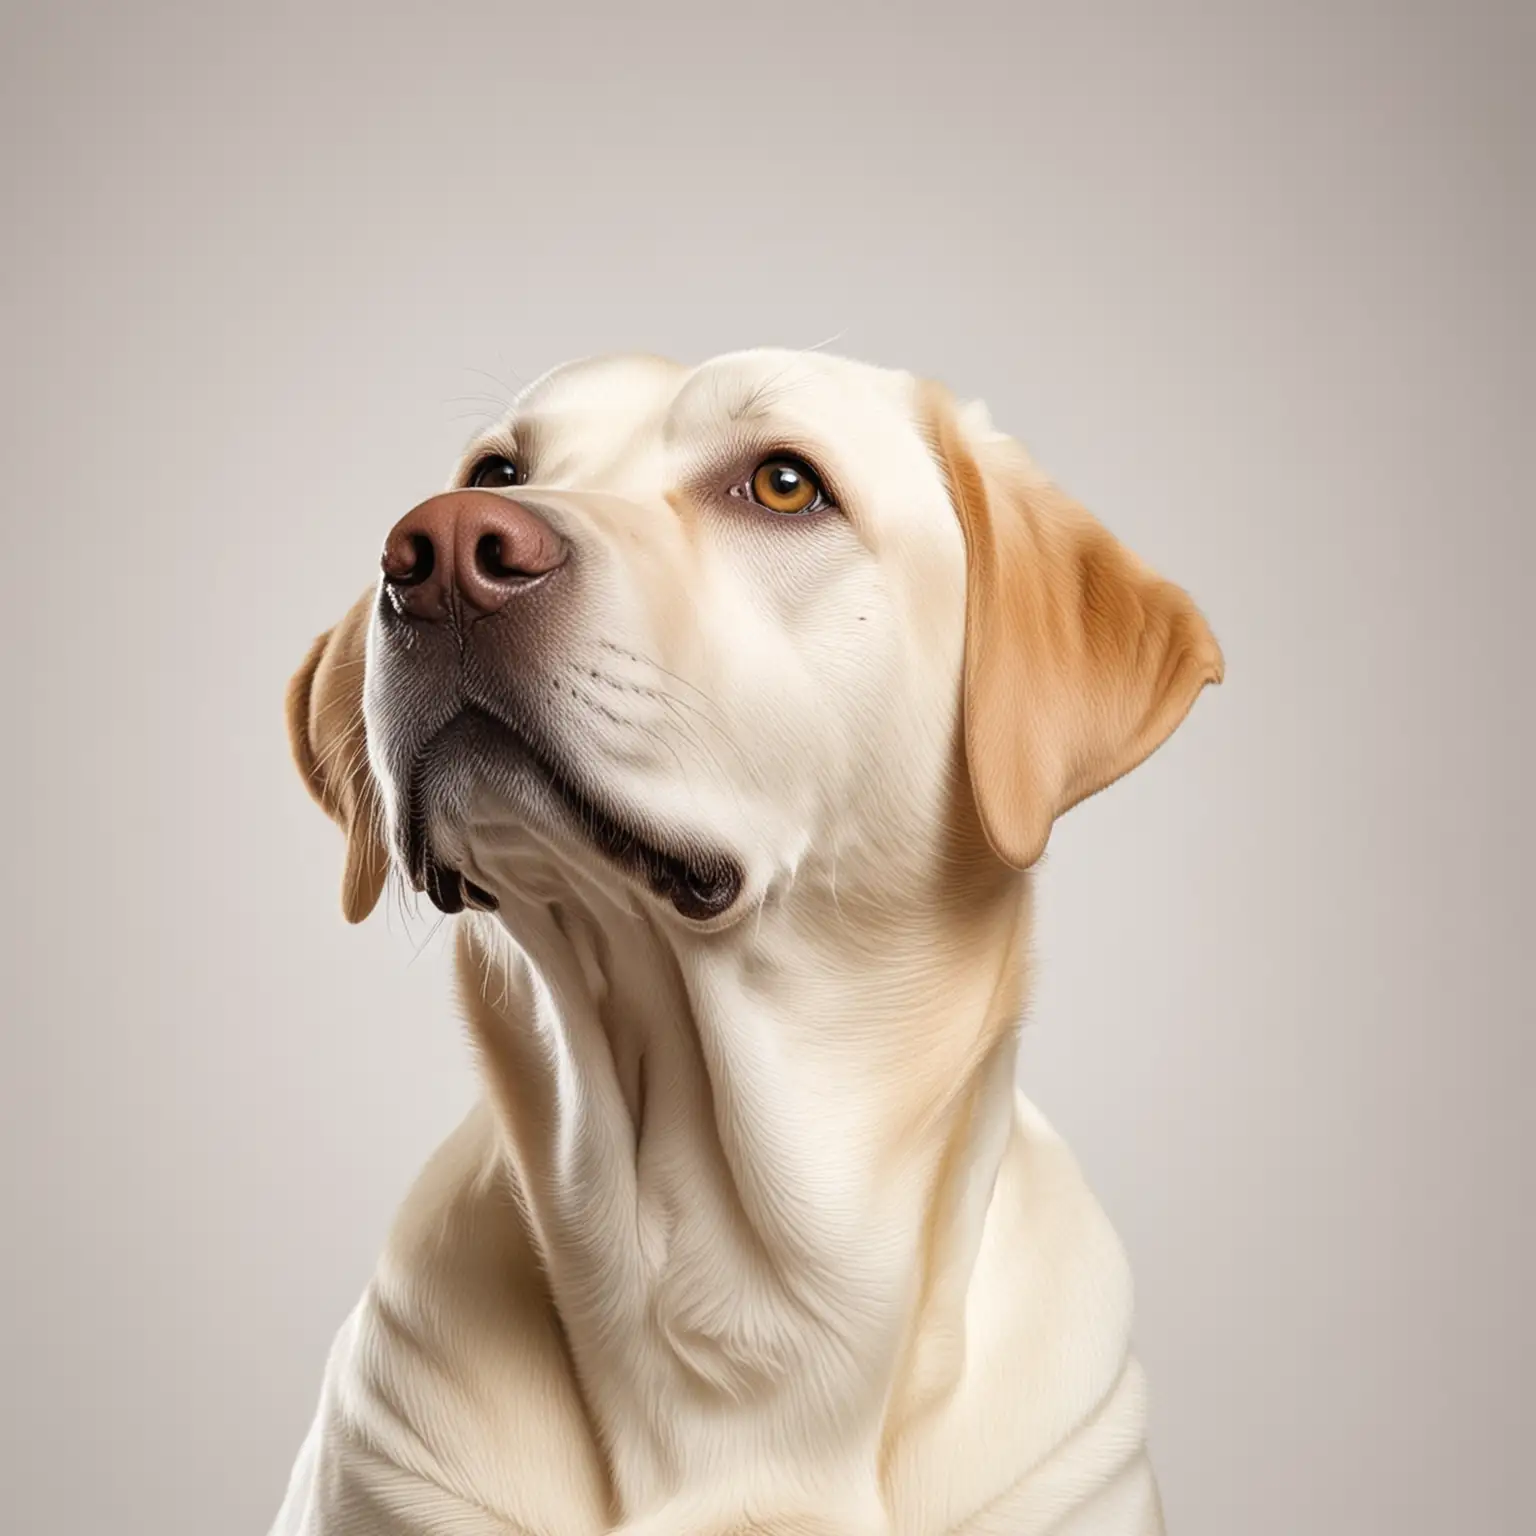 Adorable Labrador Dog Gazing Upwards on a Clean White Background